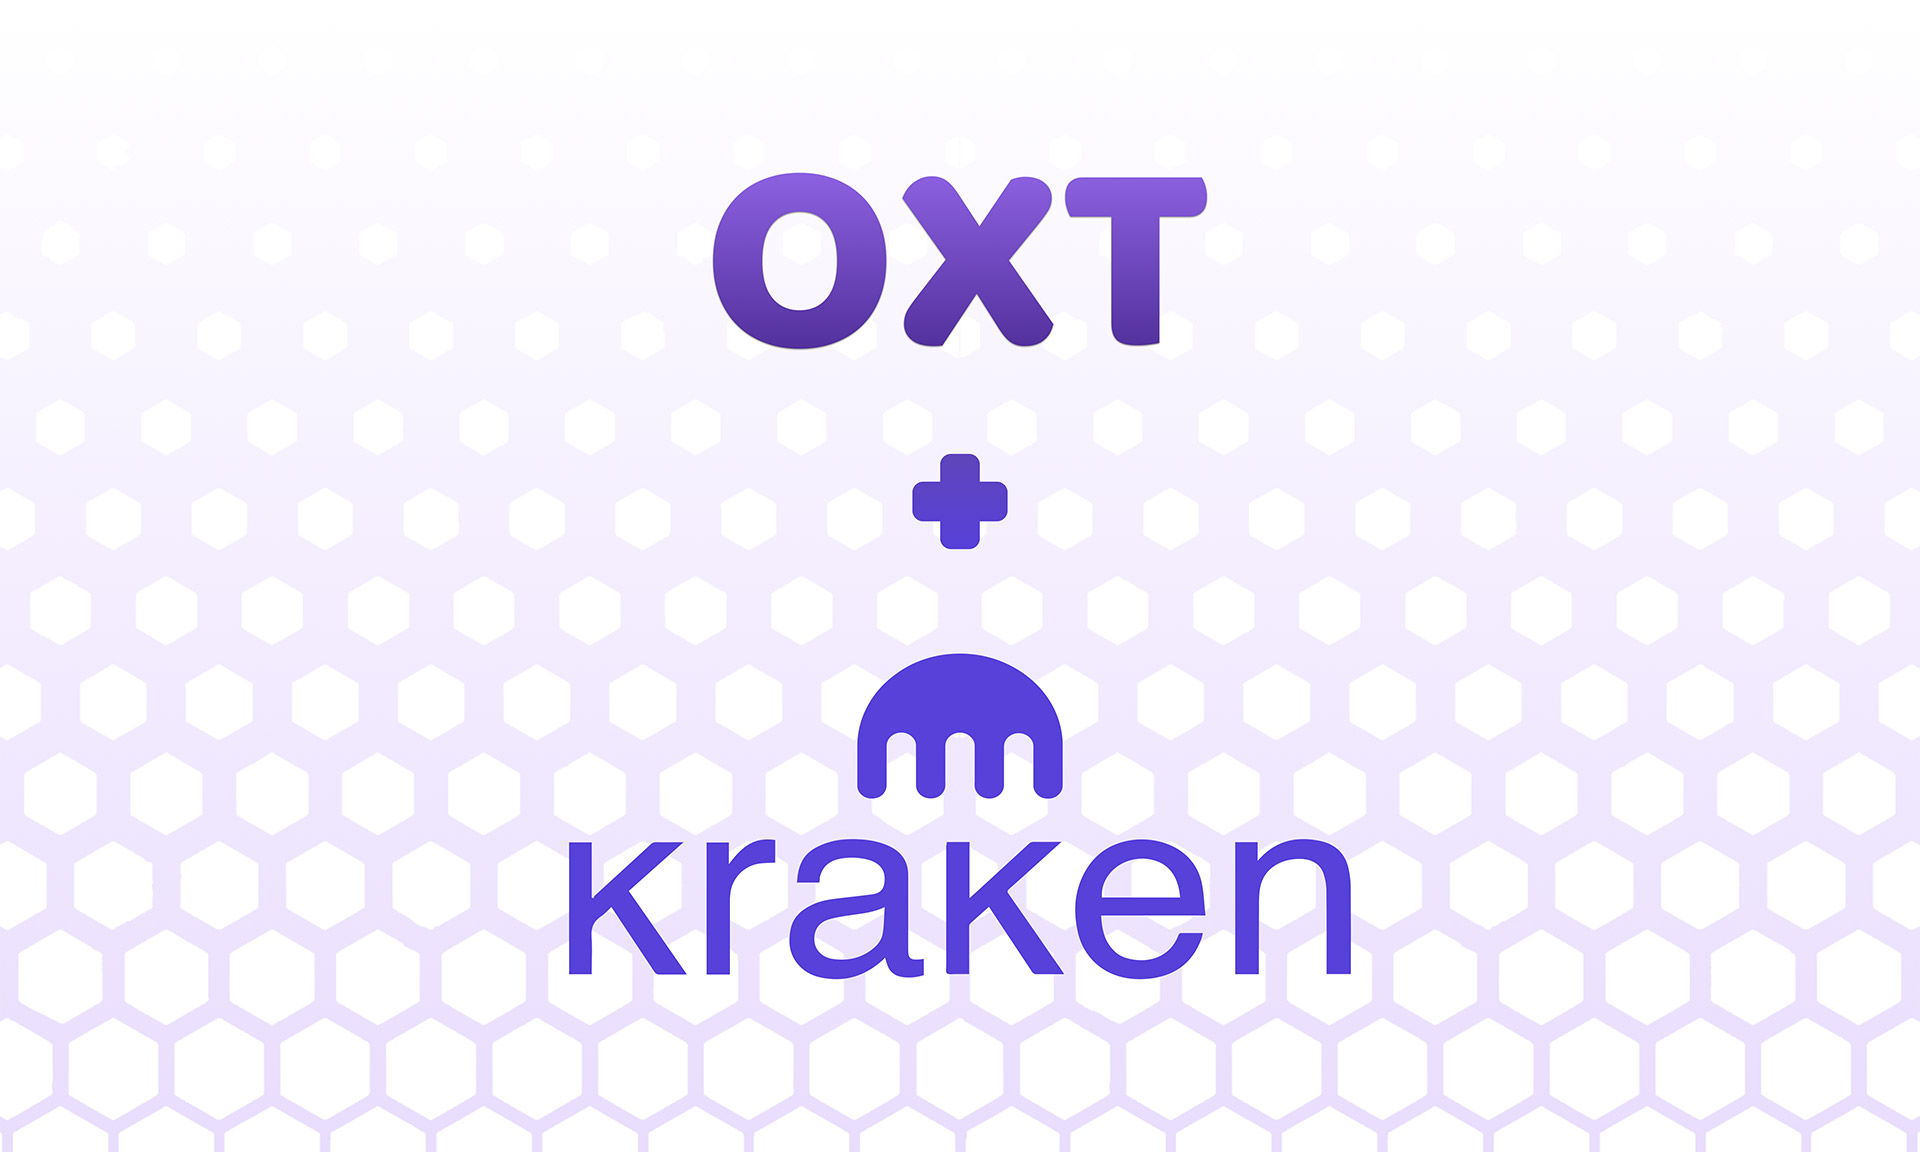 Kraken listing accelerates Orchid’s recent momentum